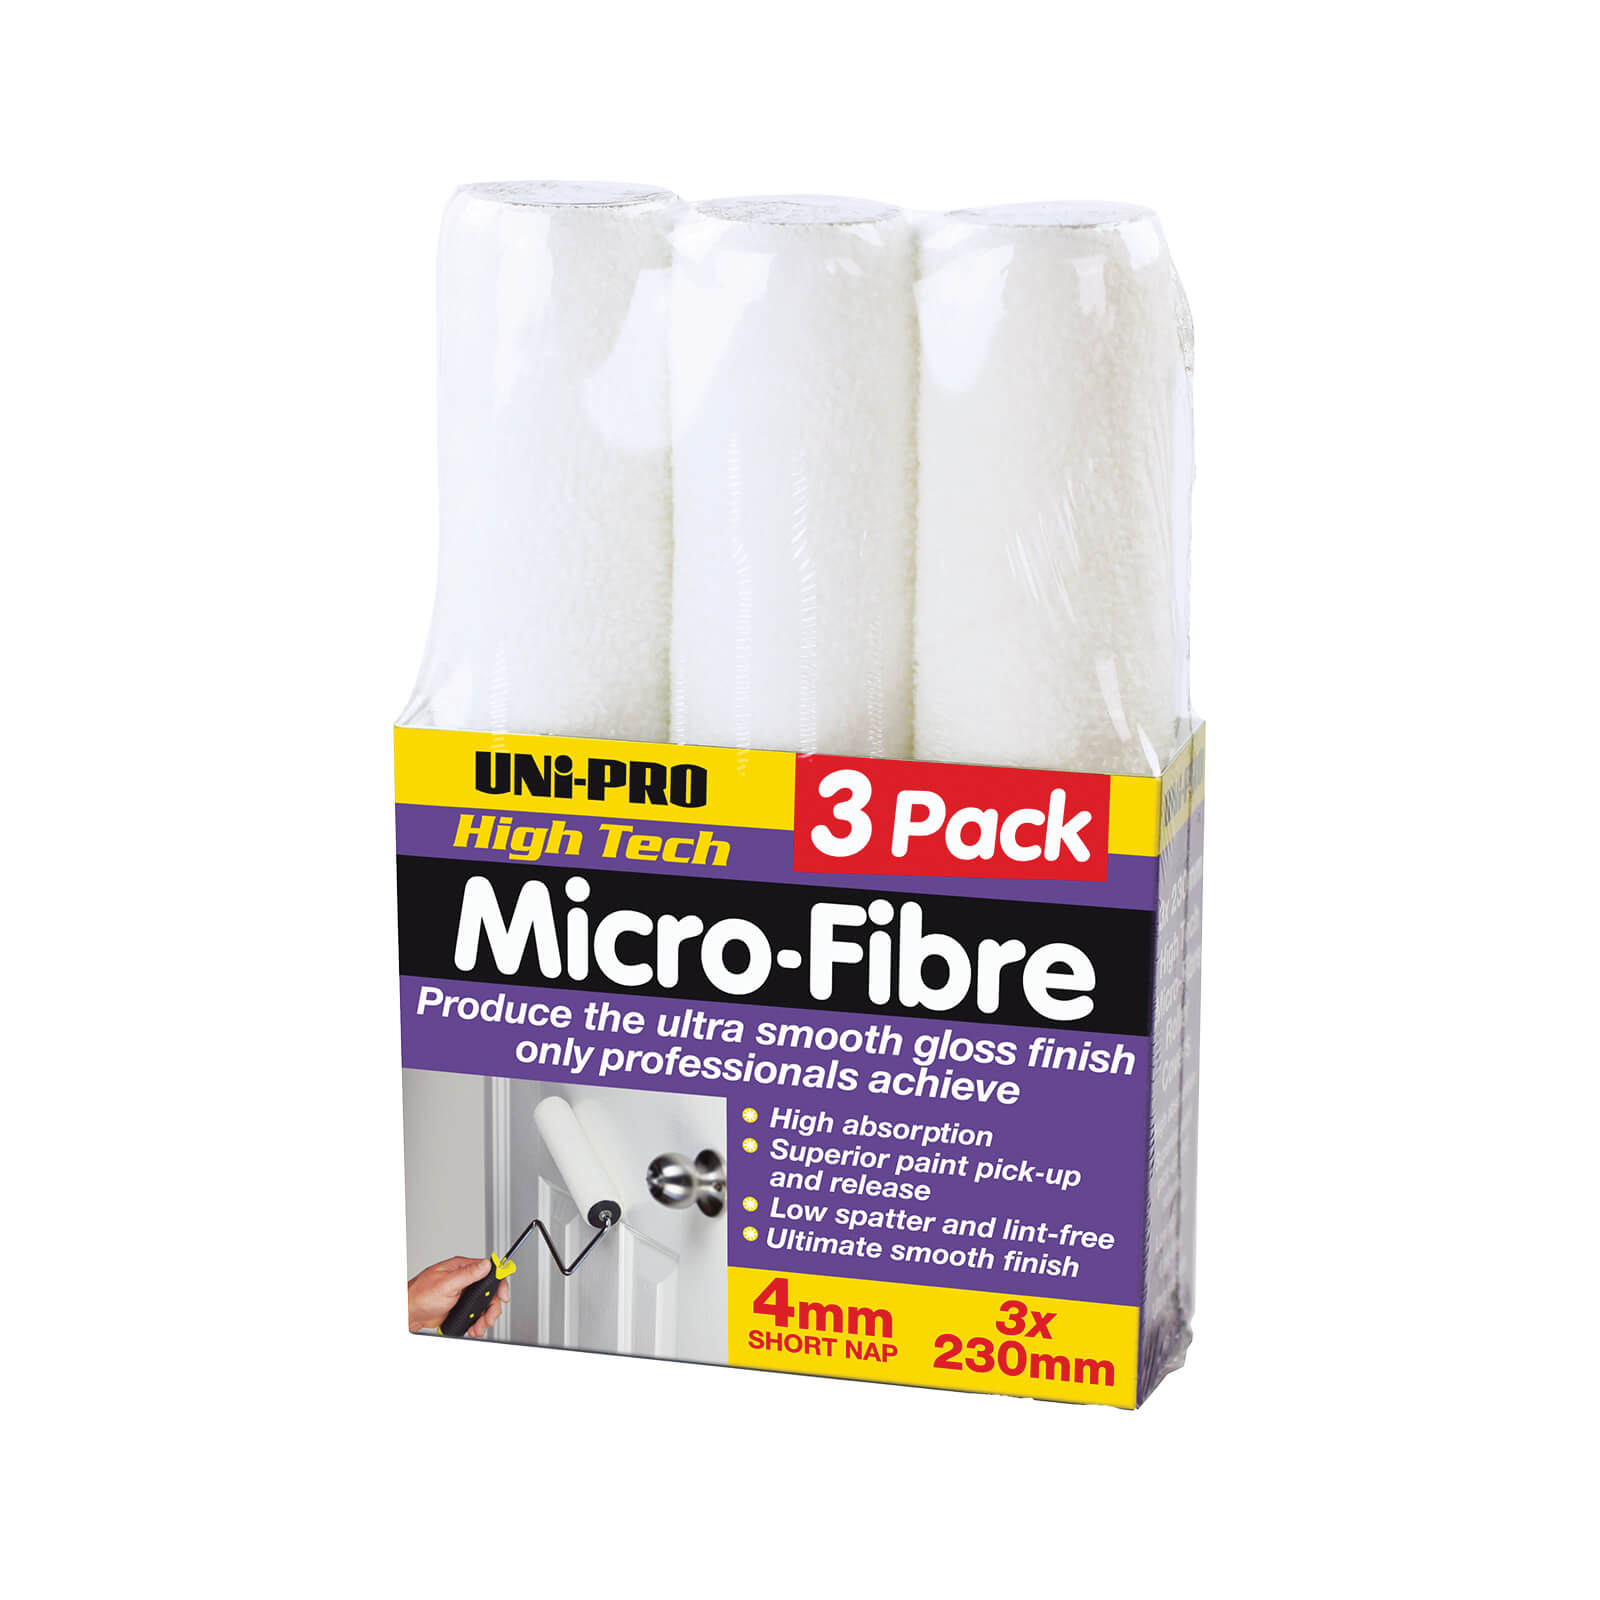 UNi-PRO 3 Pack Microfibre Roller Covers - 4mm nap